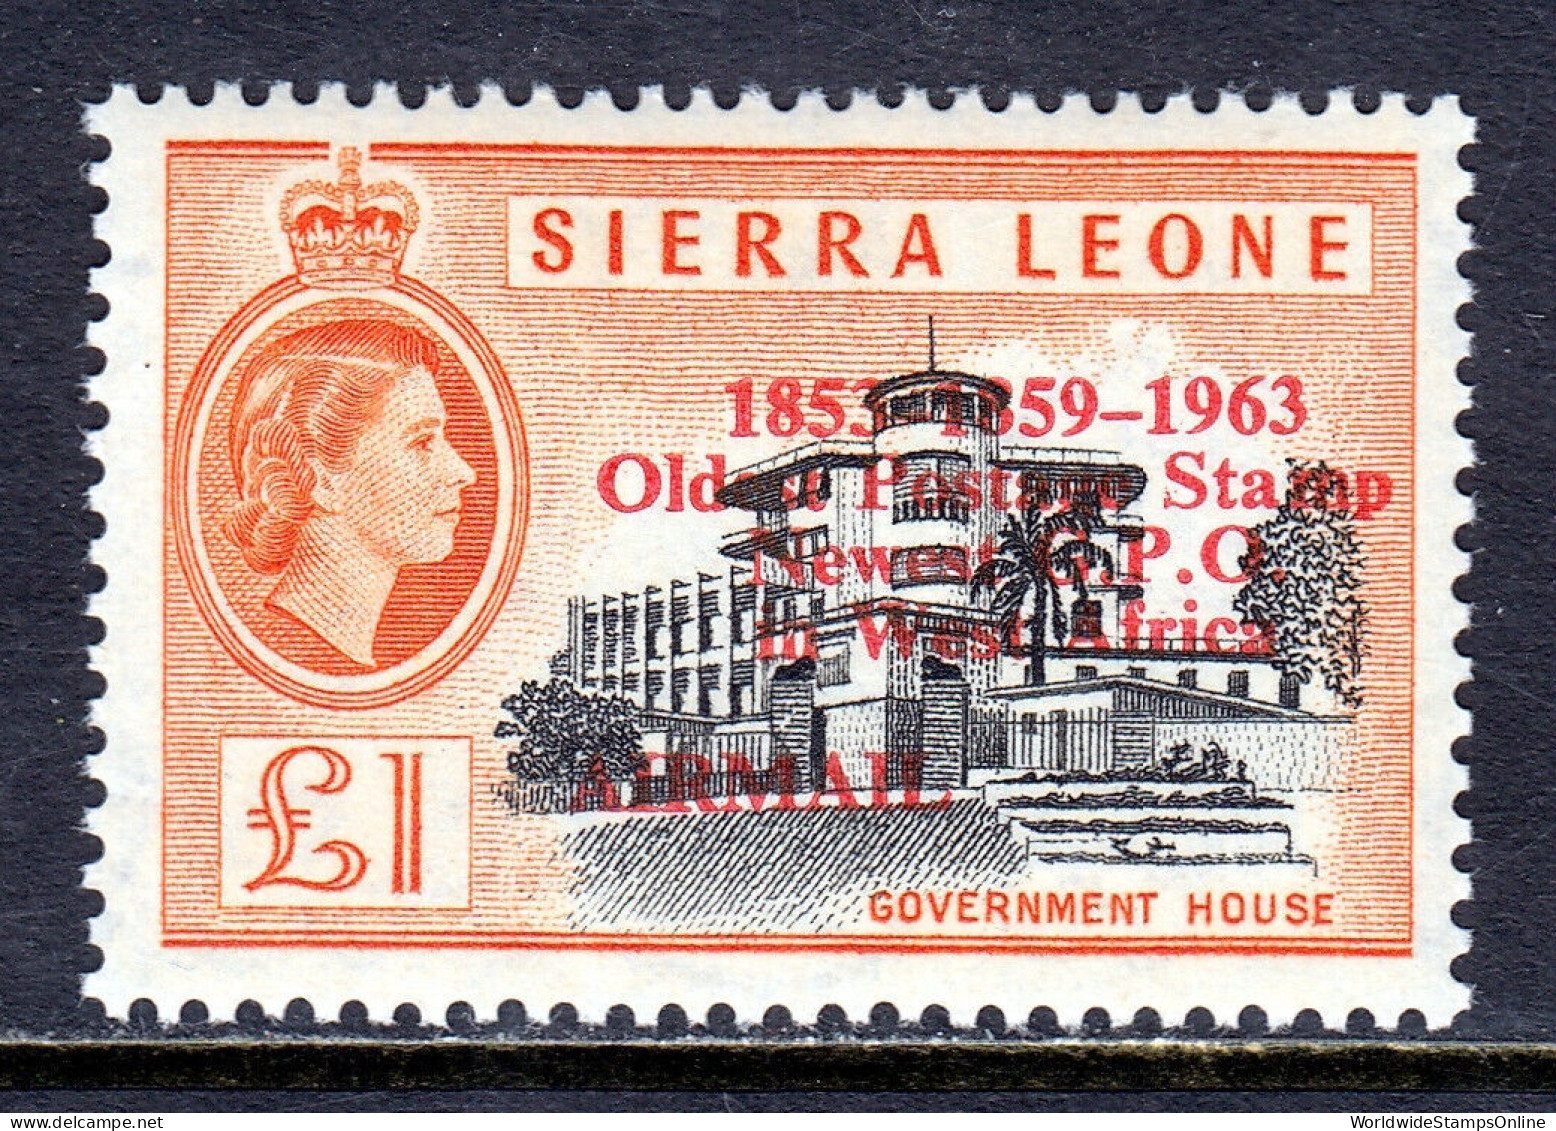 SIERRA LEONE — SCOTT C13 — 1963 £1 OLDEST STAMP AIRMAIL OVPT. — MNH — SCV $30 - Sierra Leone (1961-...)